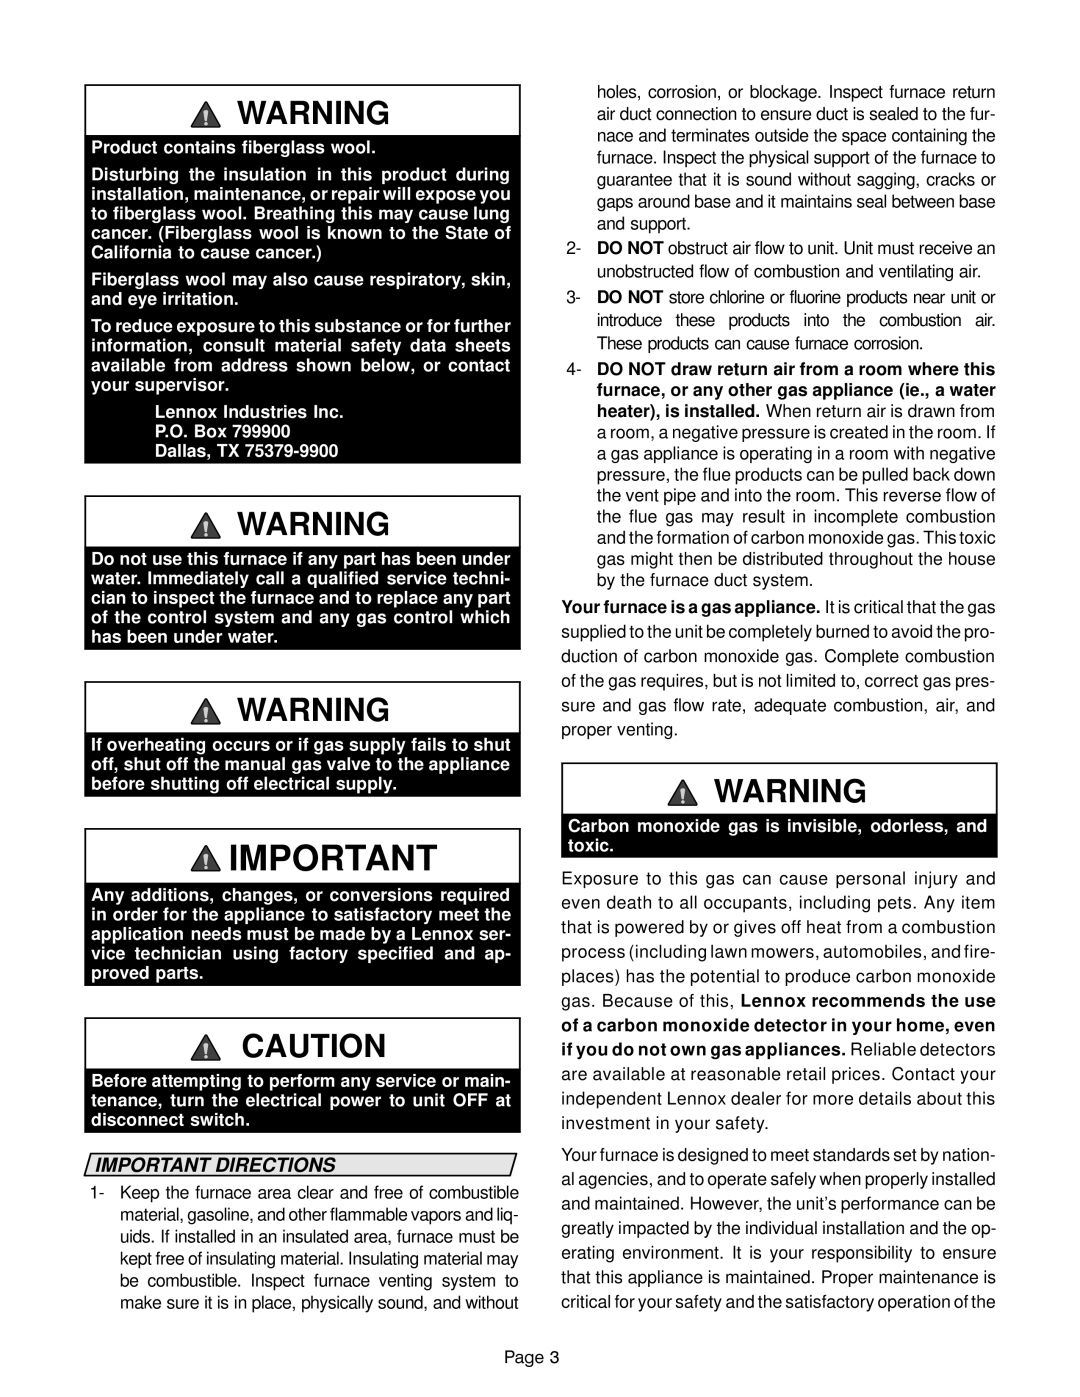 Lennox International Inc G20 manual Important Directions 